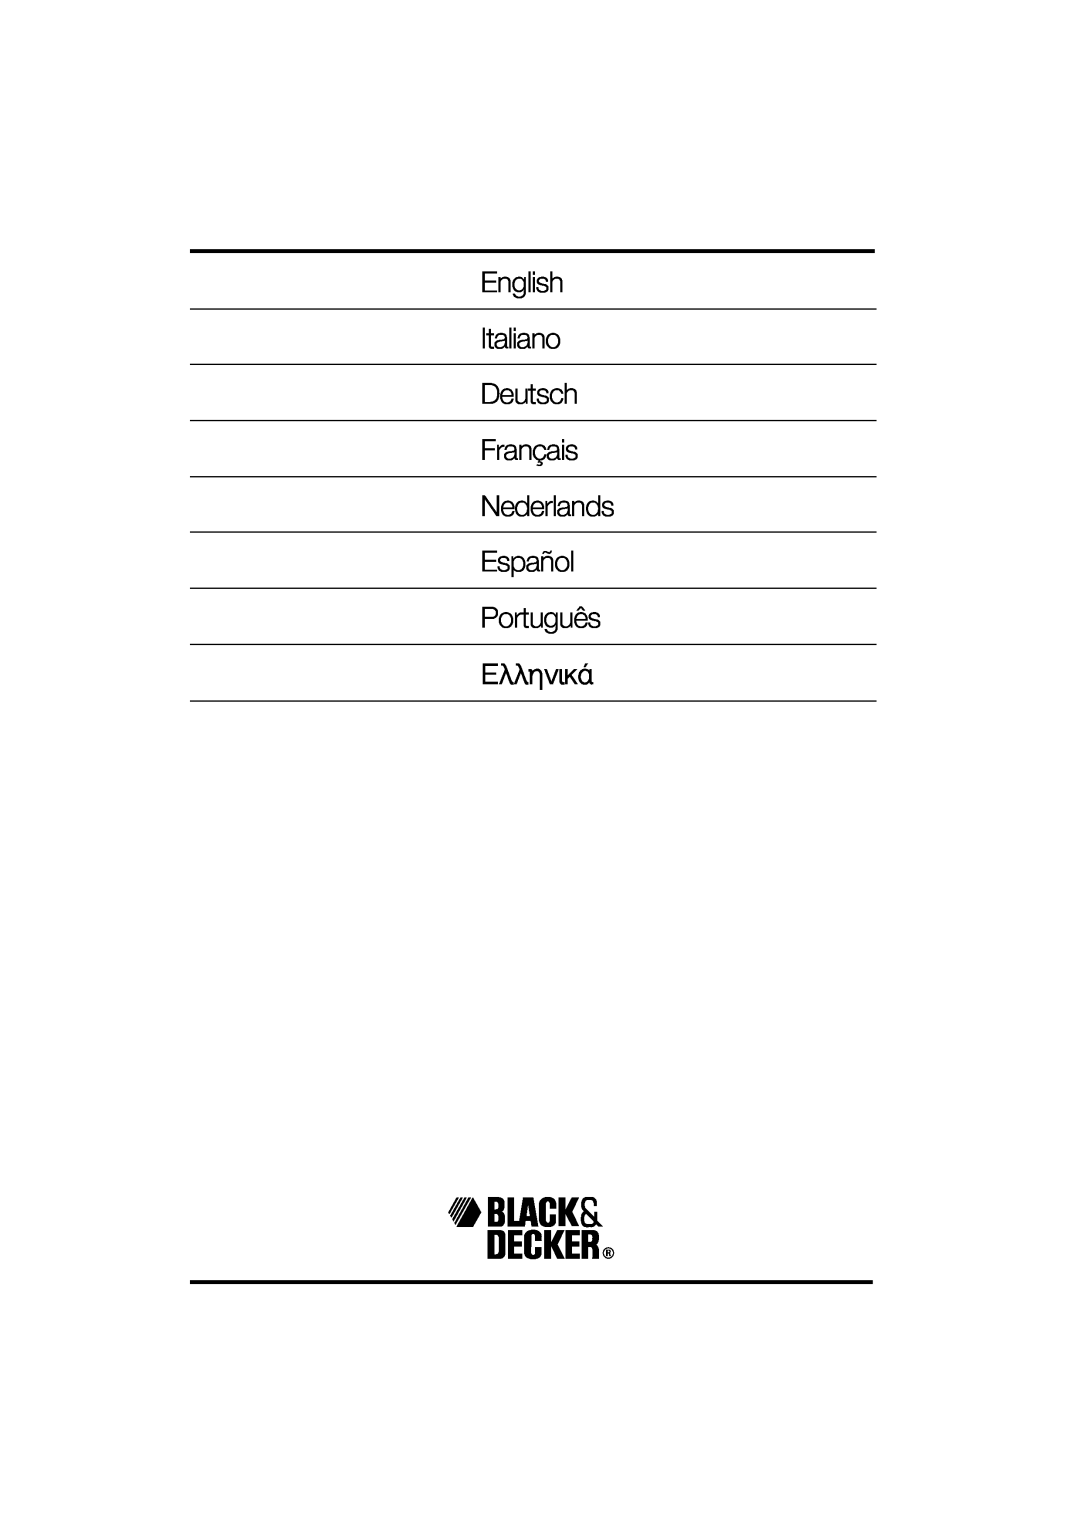 Black & Decker GL570 instruction manual English Italiano Deutsch Français Nederlands, Español Português, EììèîéëÀ 